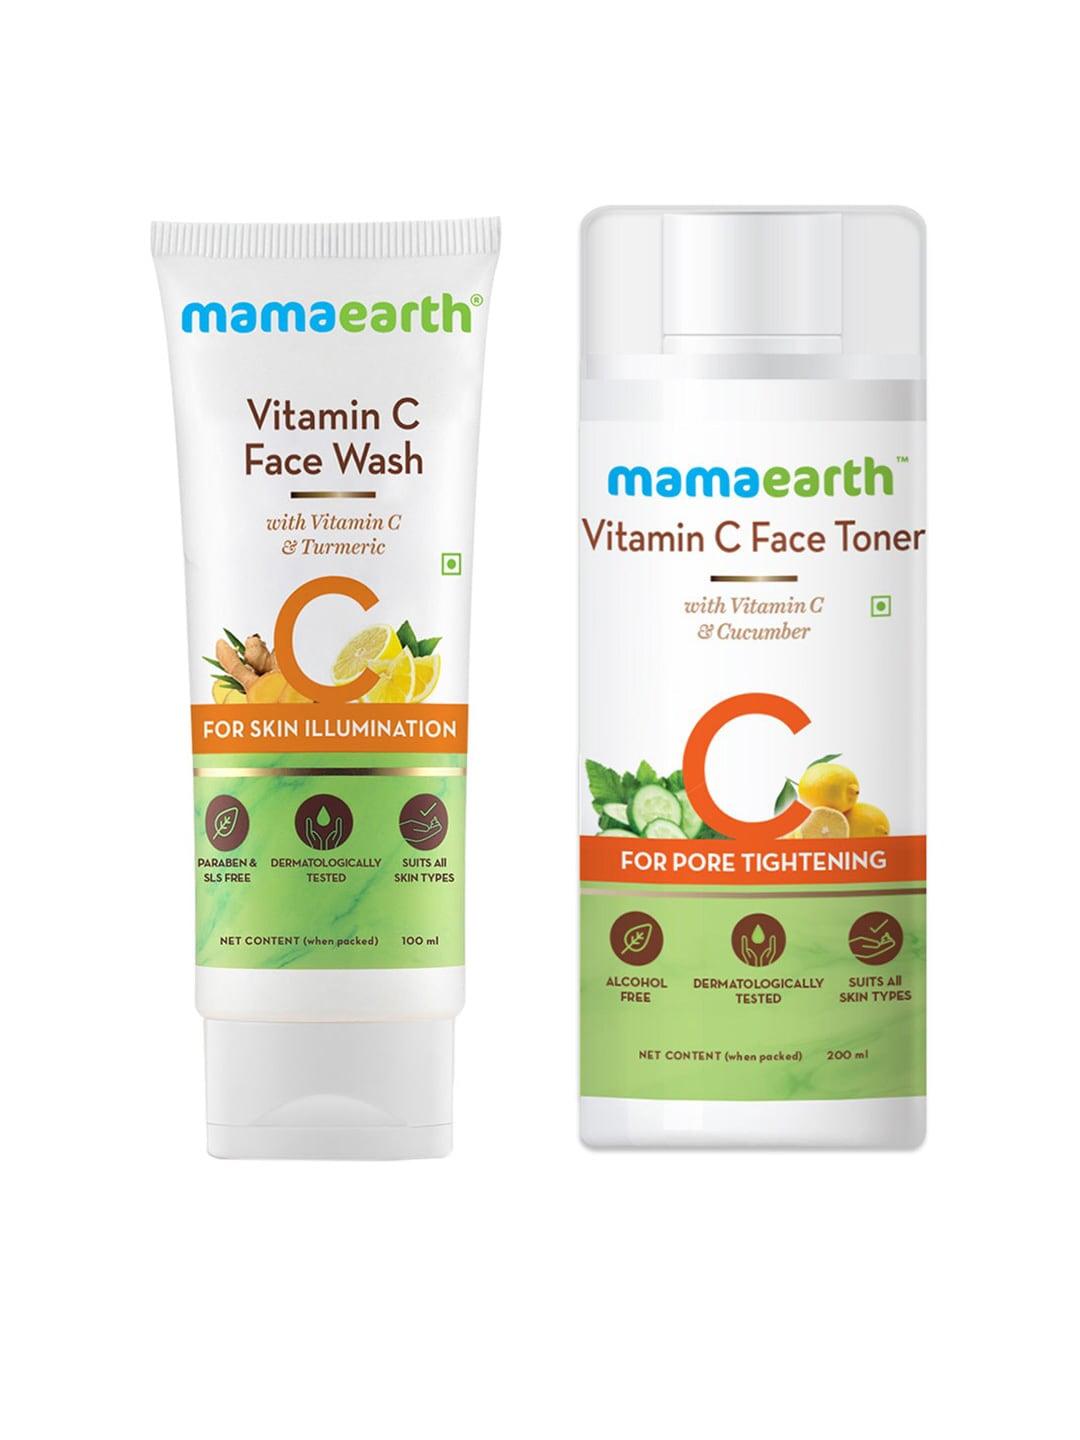 mamaearth unisex set of vitamin c toner & face wash